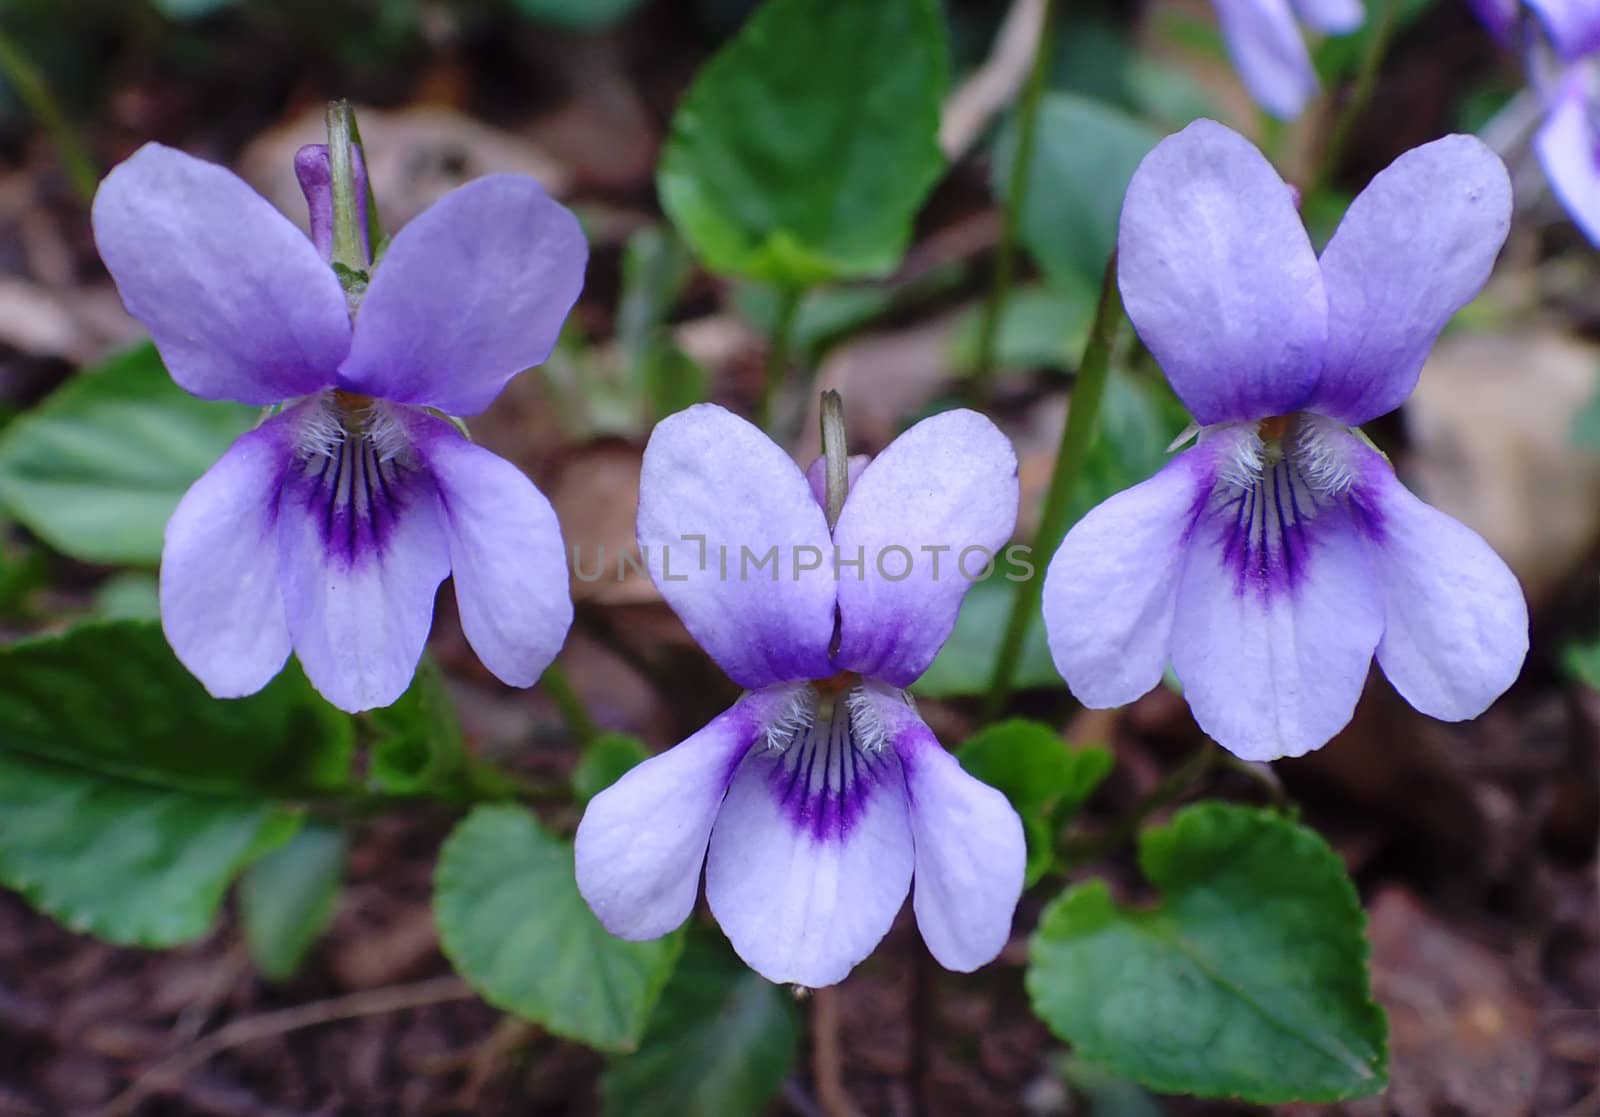 a close up of a three violets